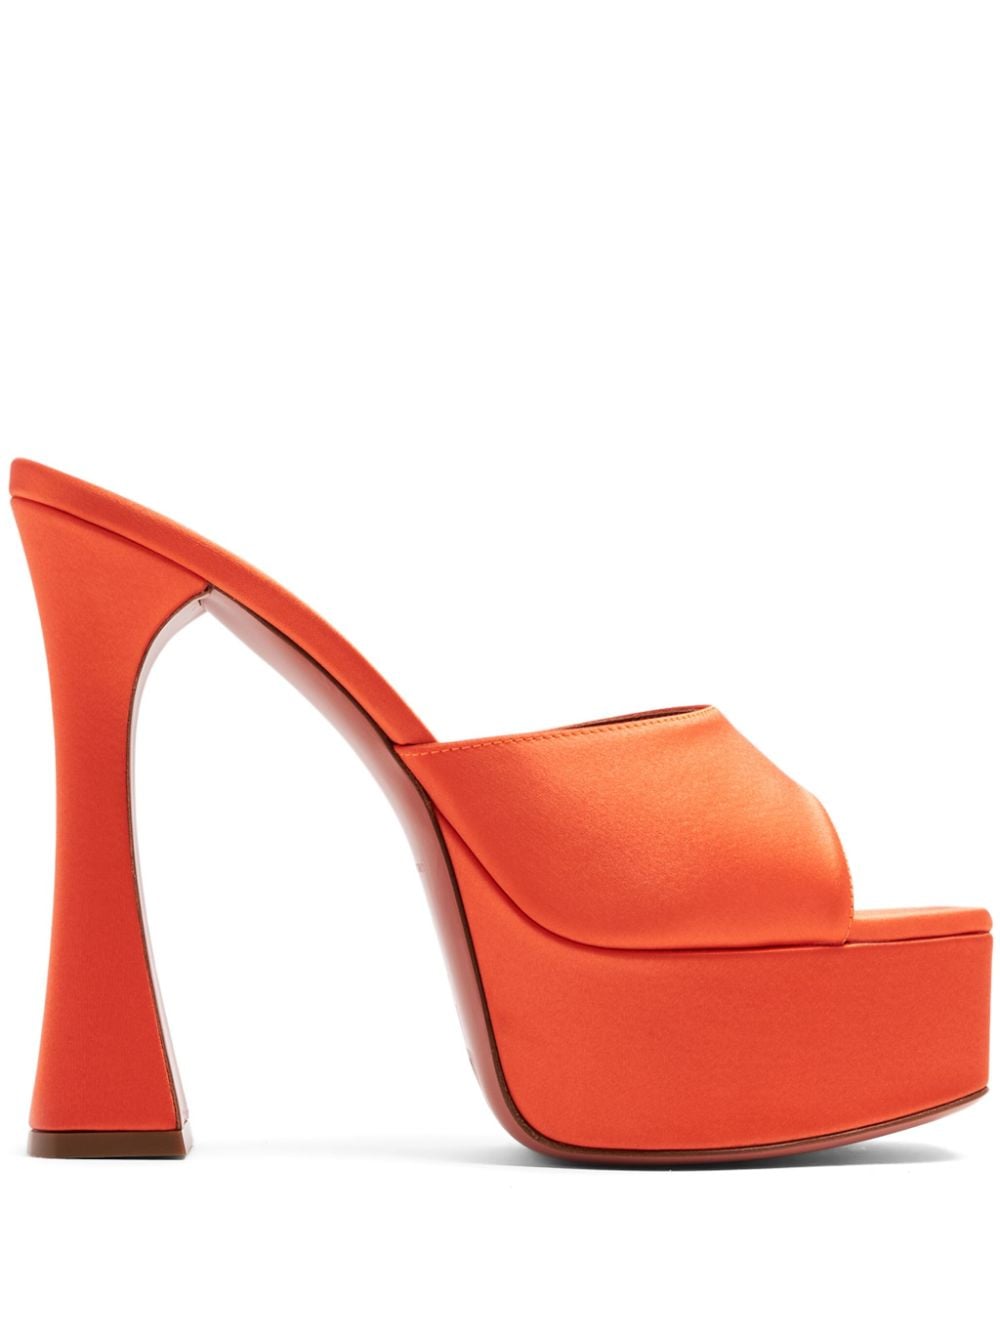 Amina Muaddi Dalida Satin 140mm platform sandals - Orange von Amina Muaddi